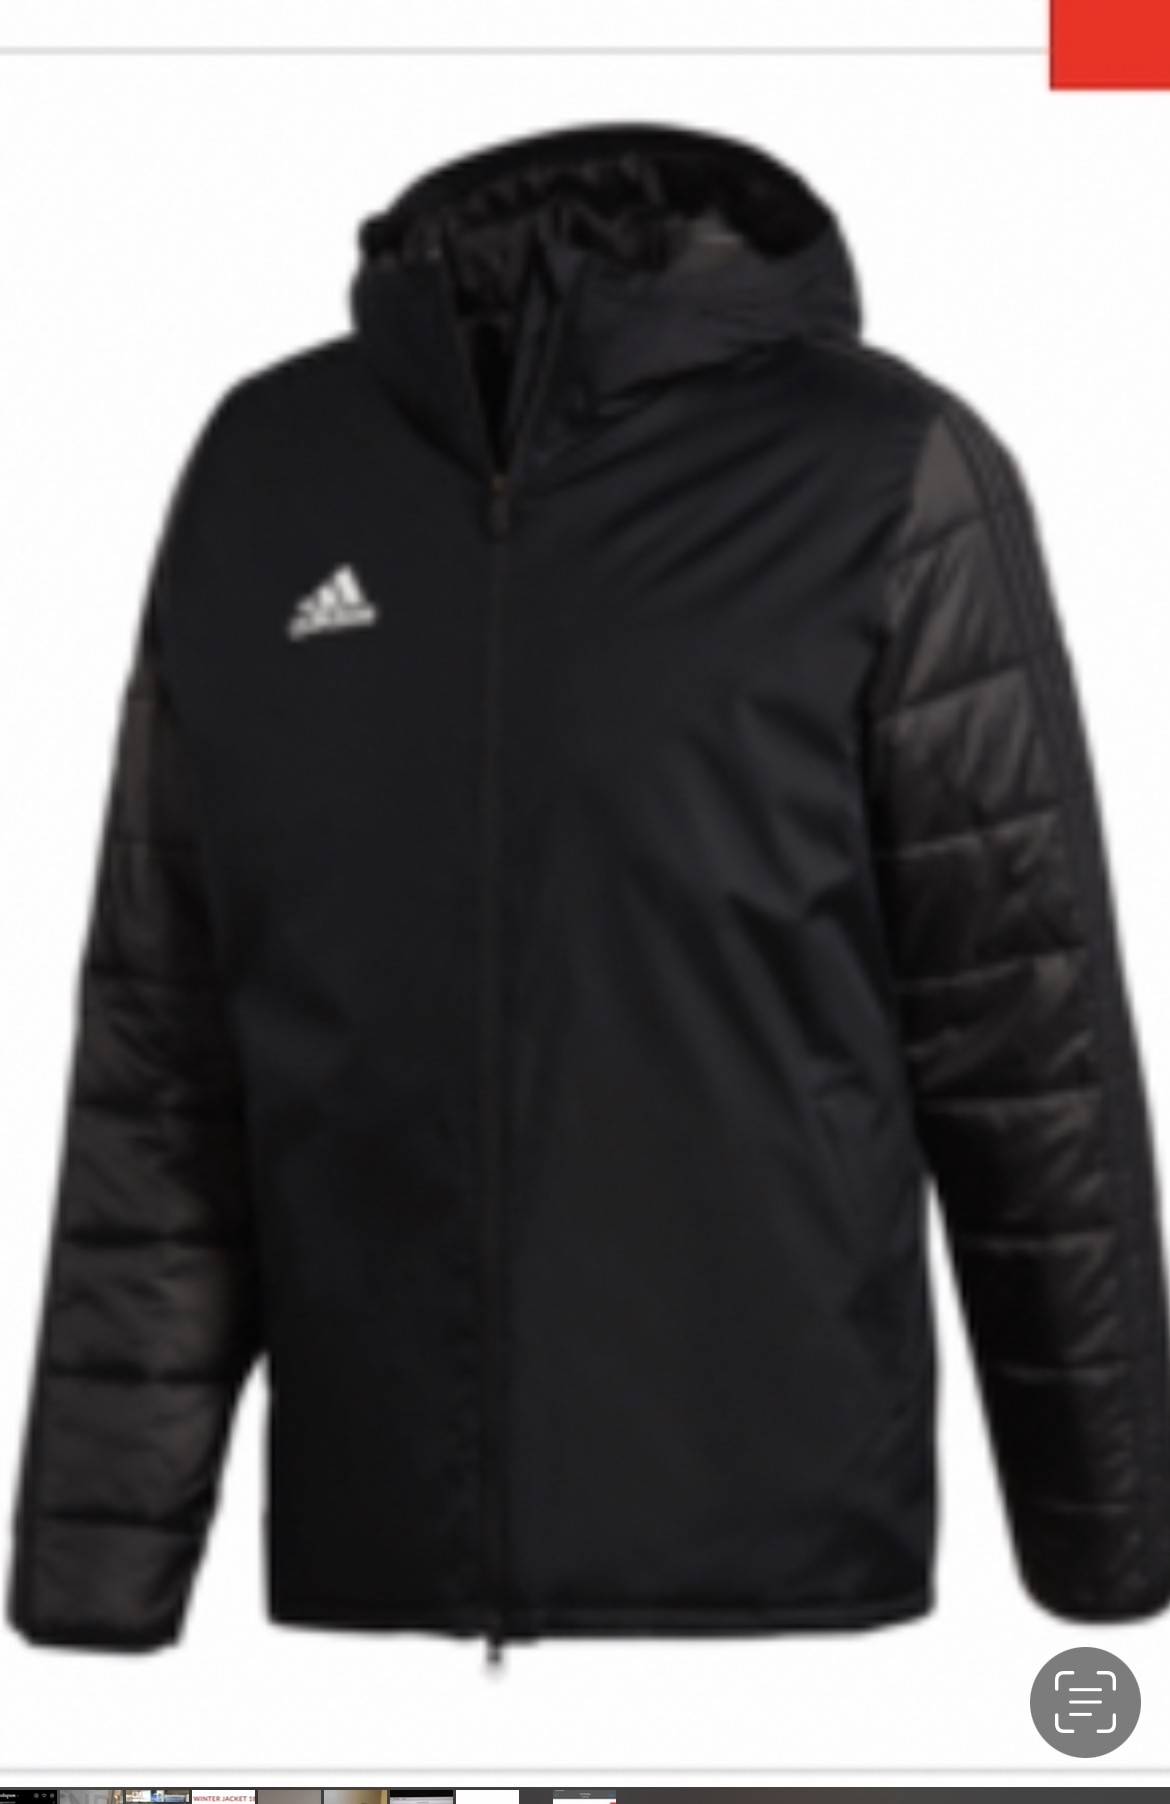 Adidas Winter Jacket 18